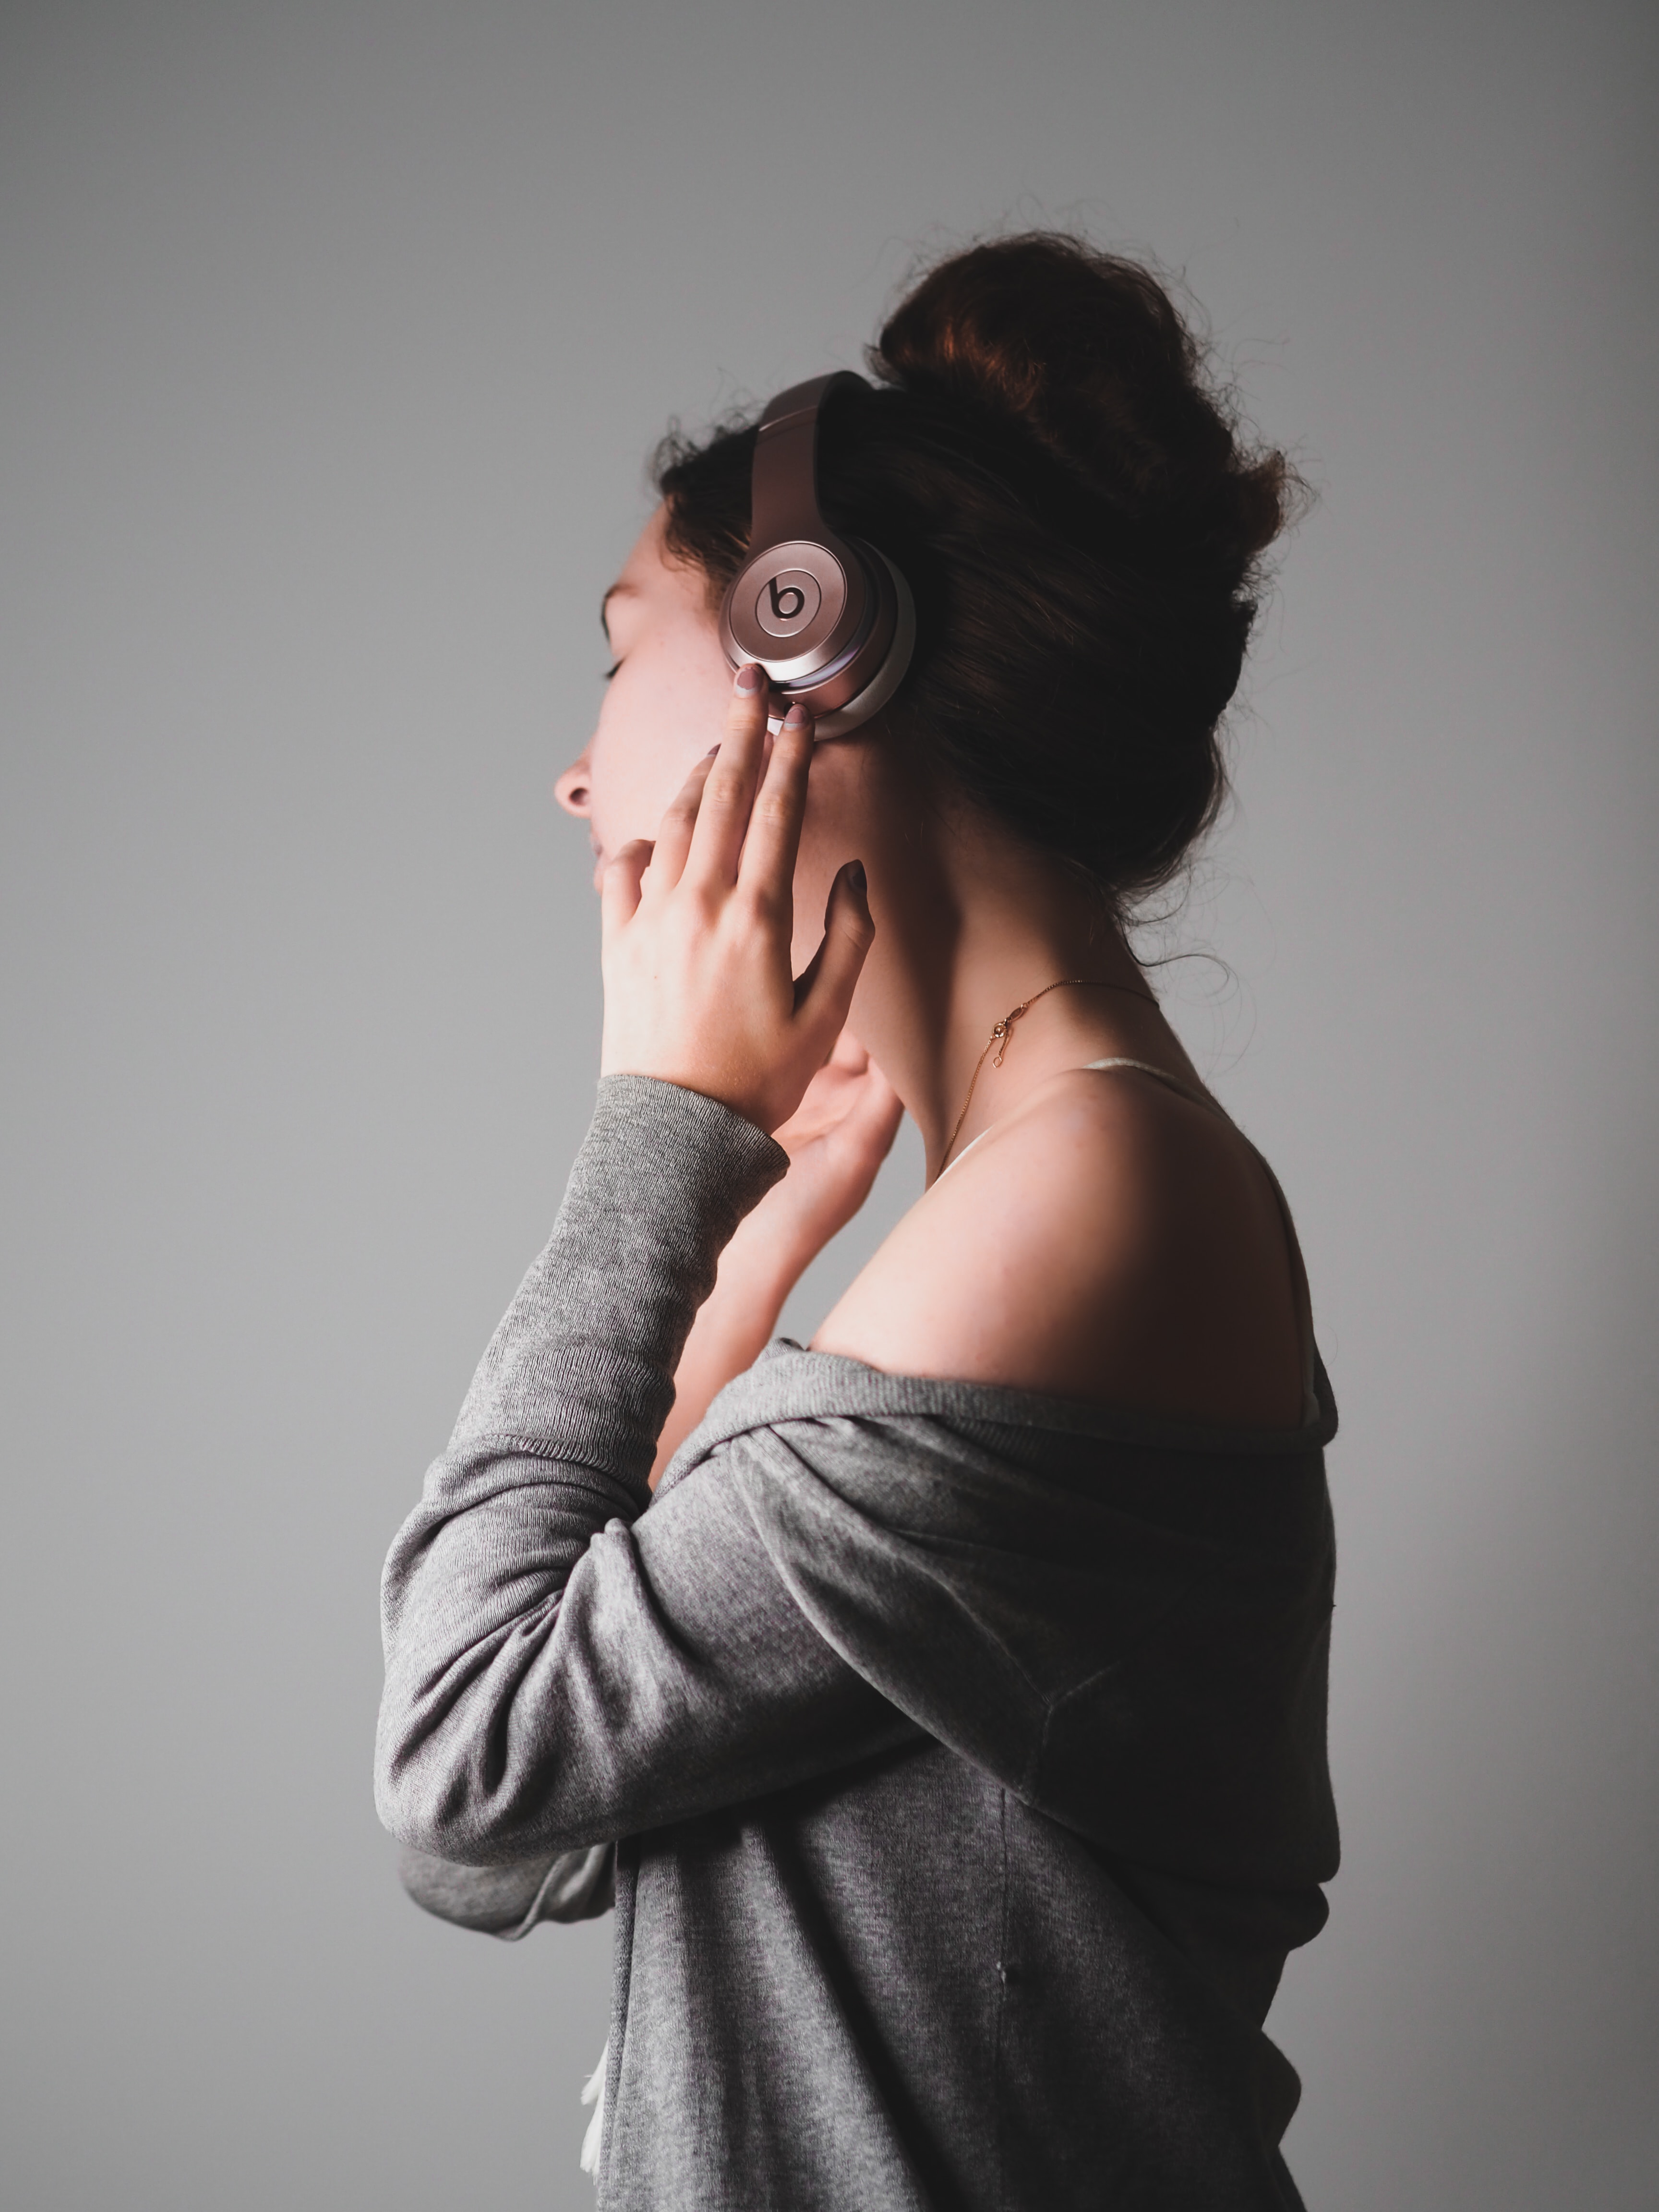 A woman listening to music. | Source: Unsplash